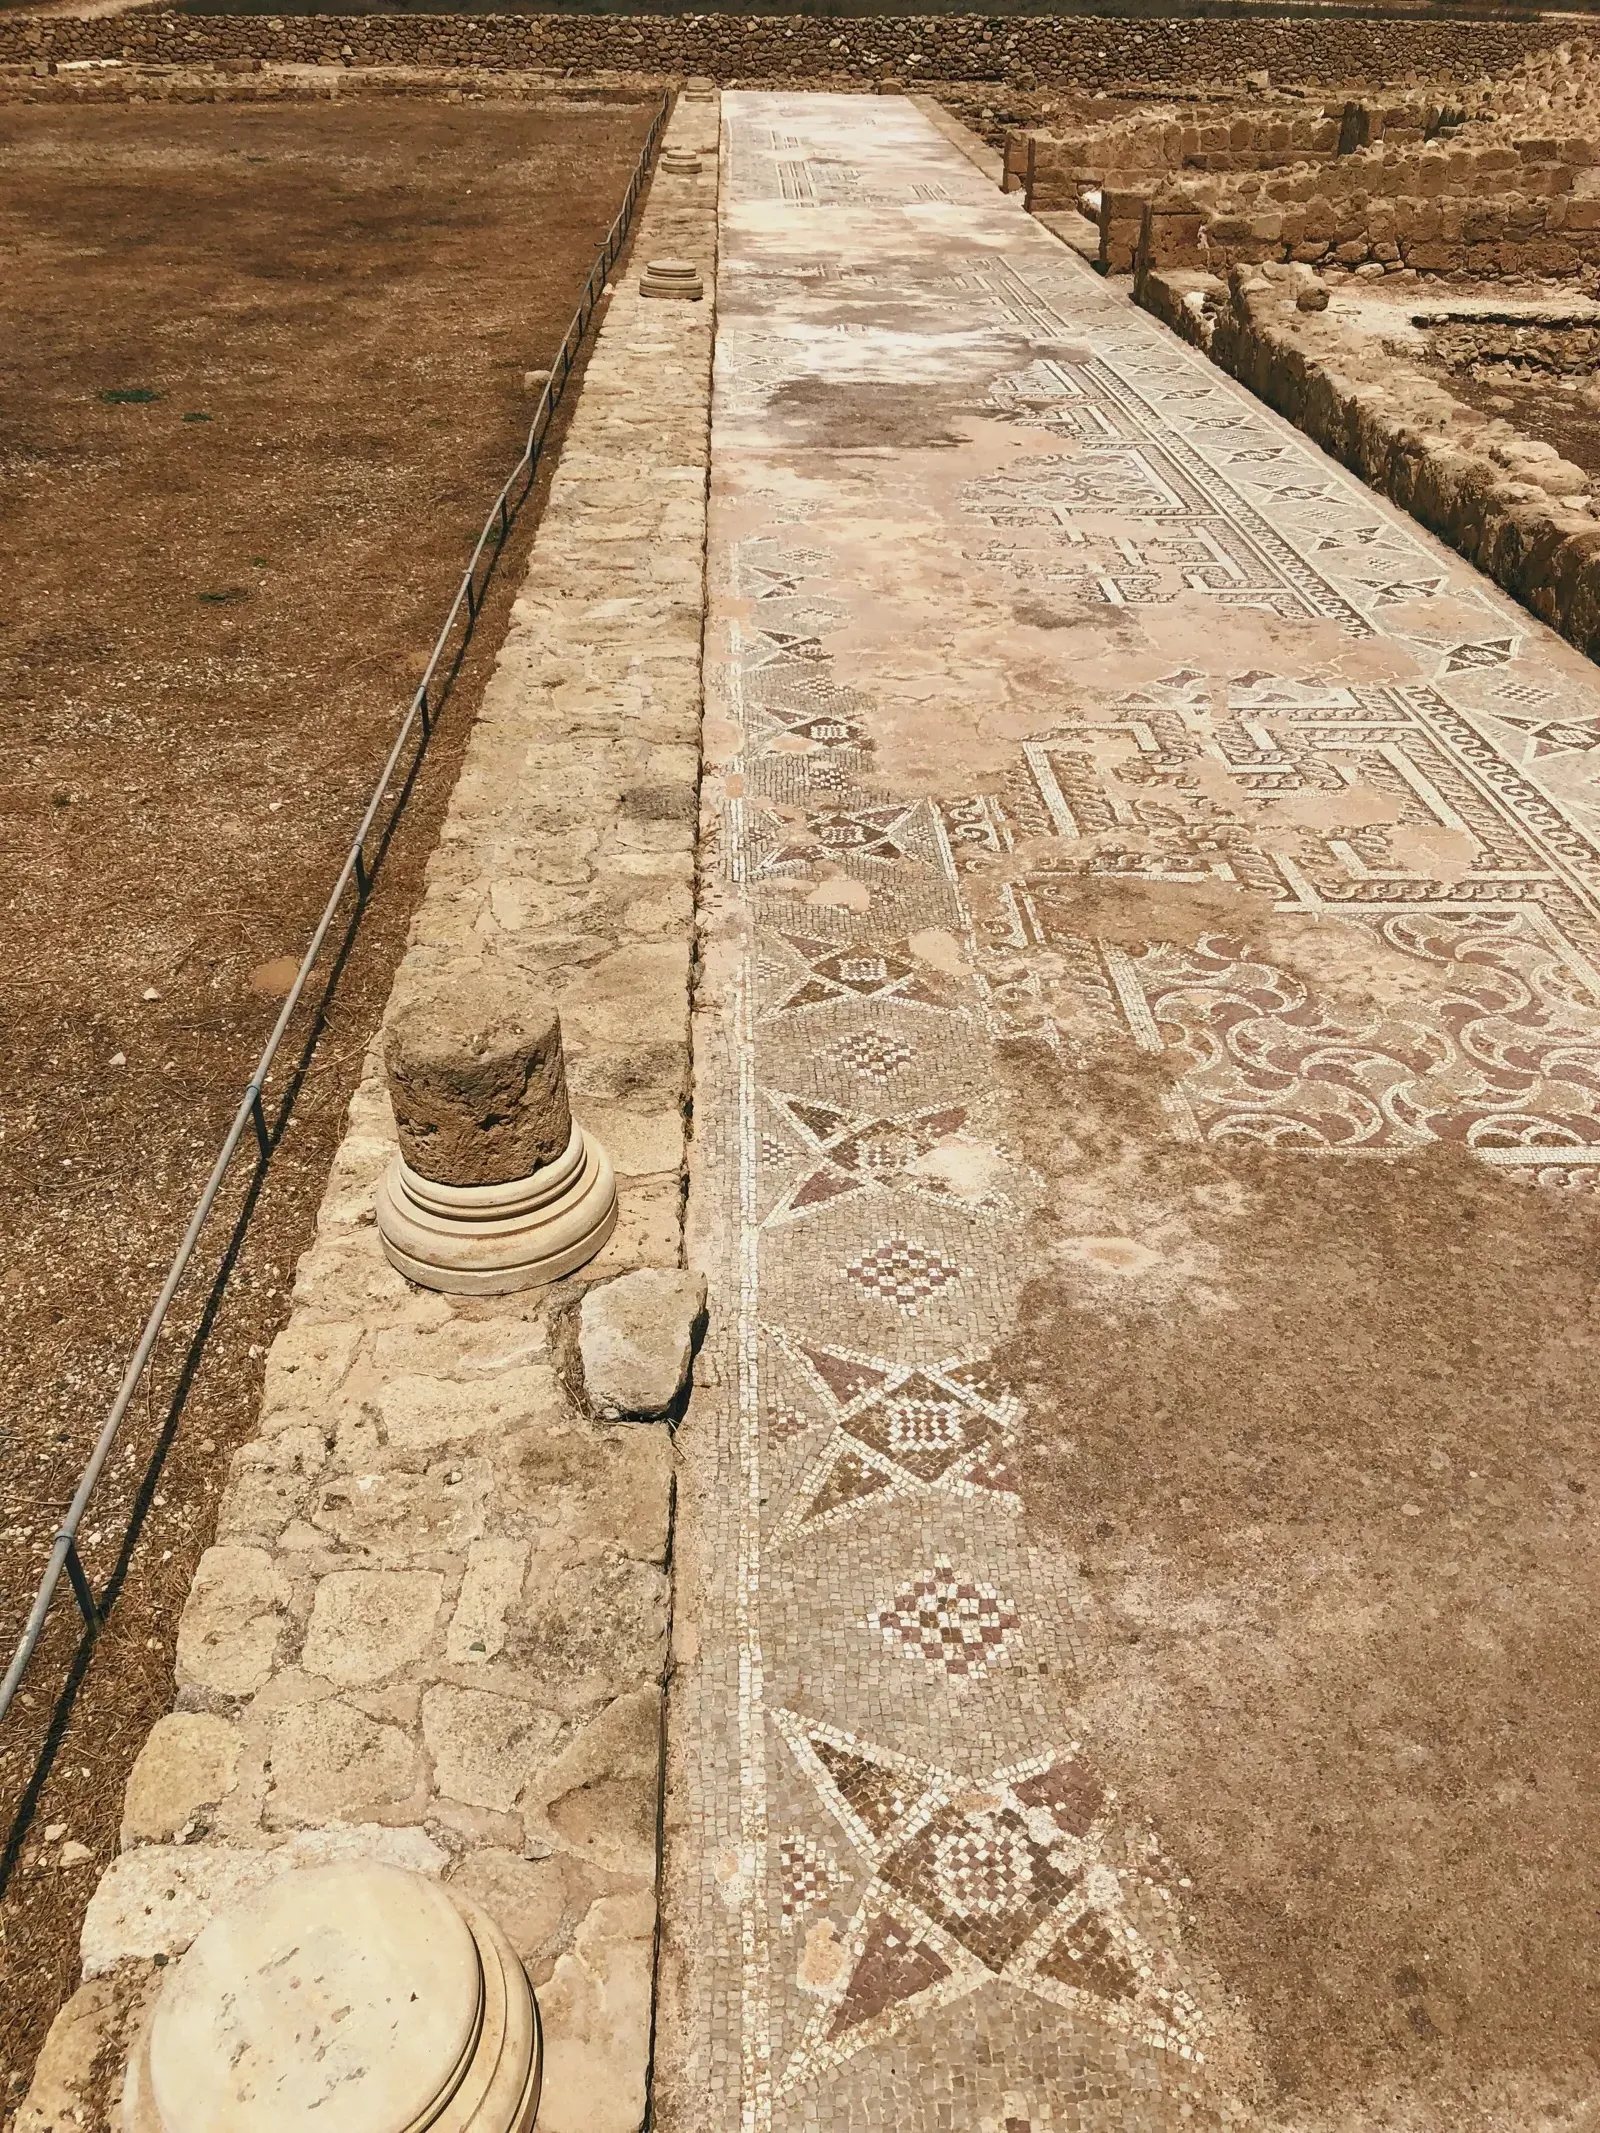 Stone path leading to a stone pillar in Nea Paphos